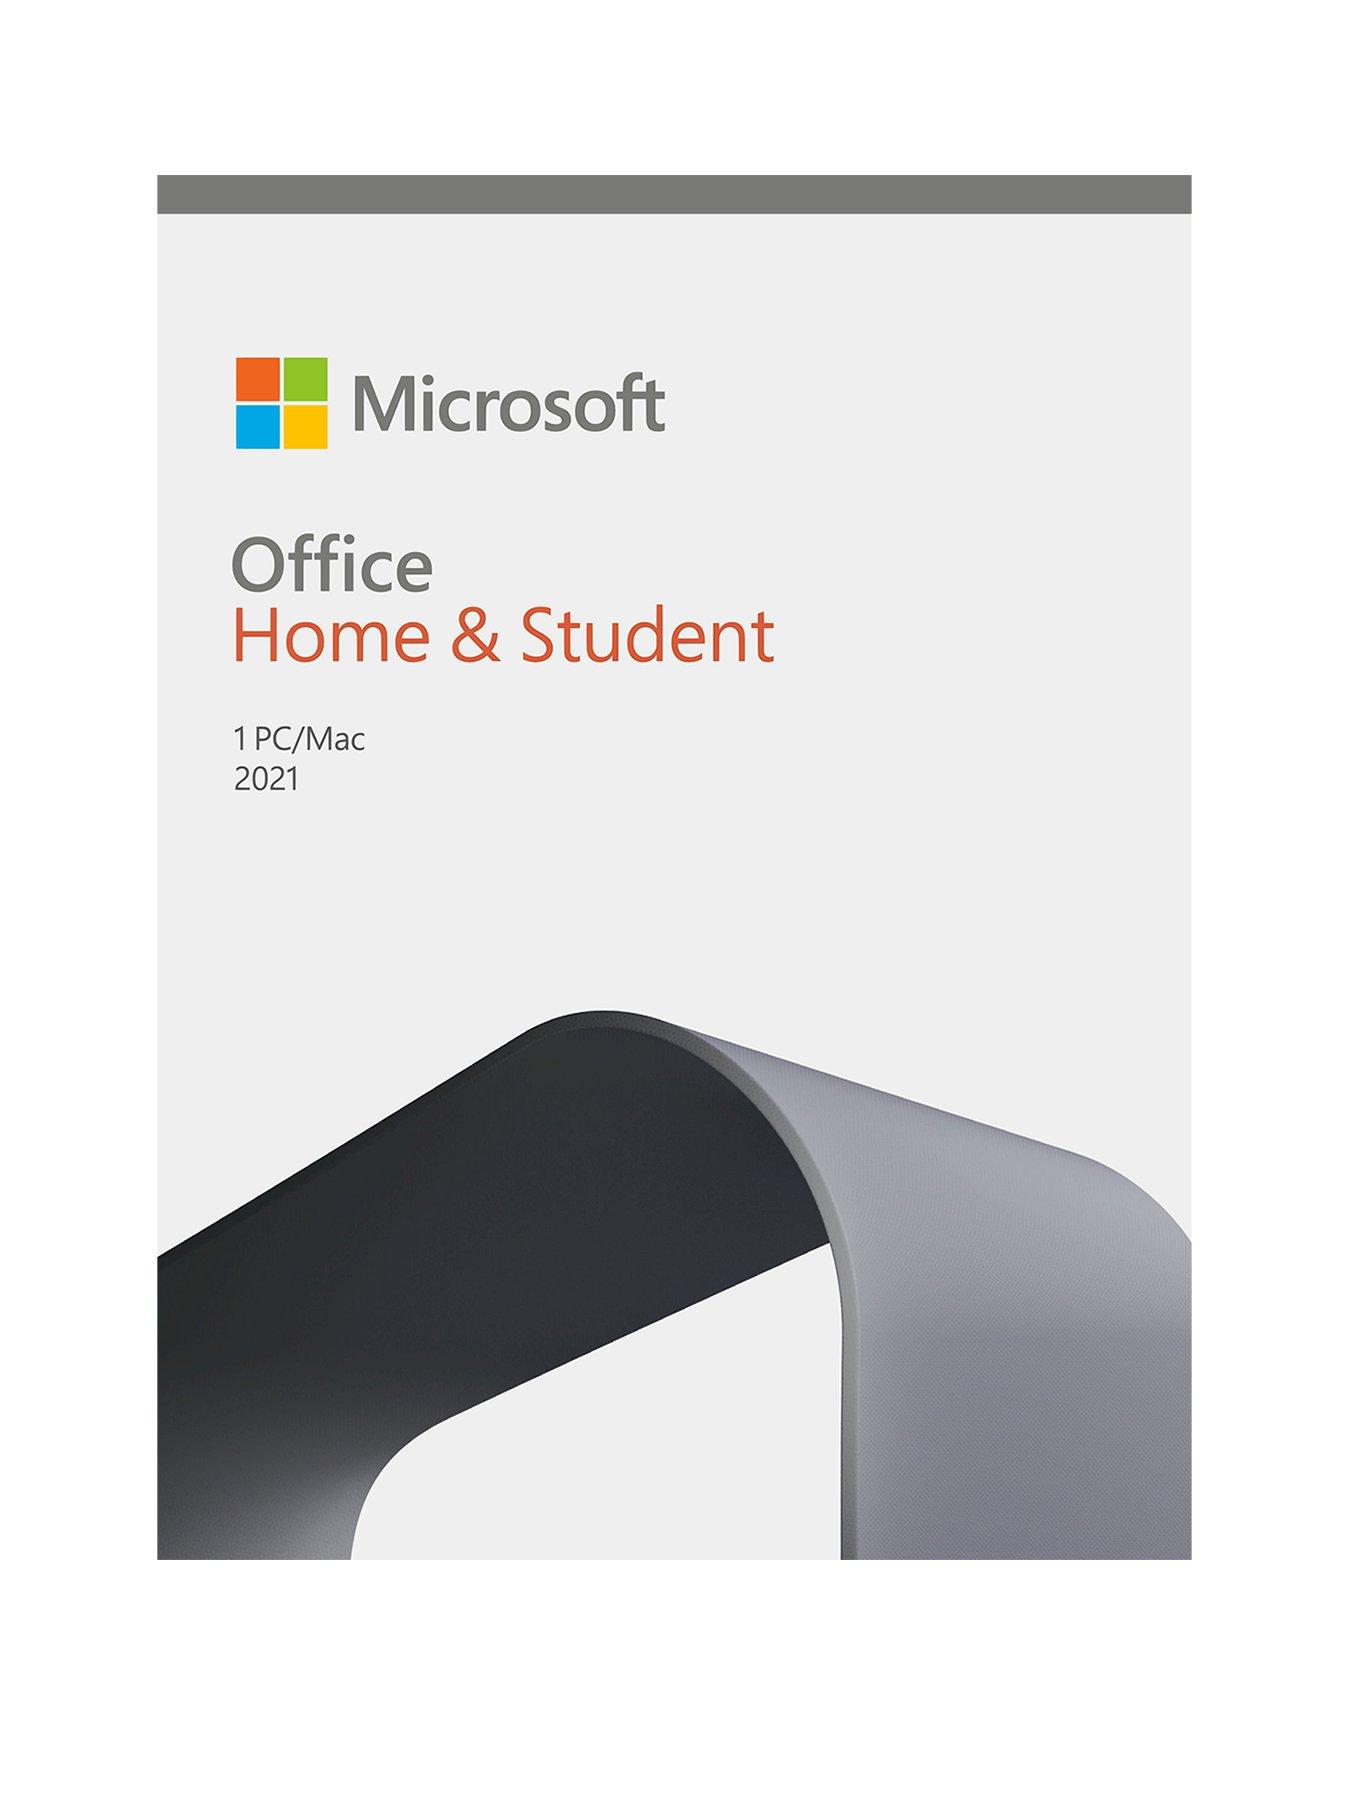 Microsoft Office Home & Student 2021 - 1 PC/Mac (Digital Download